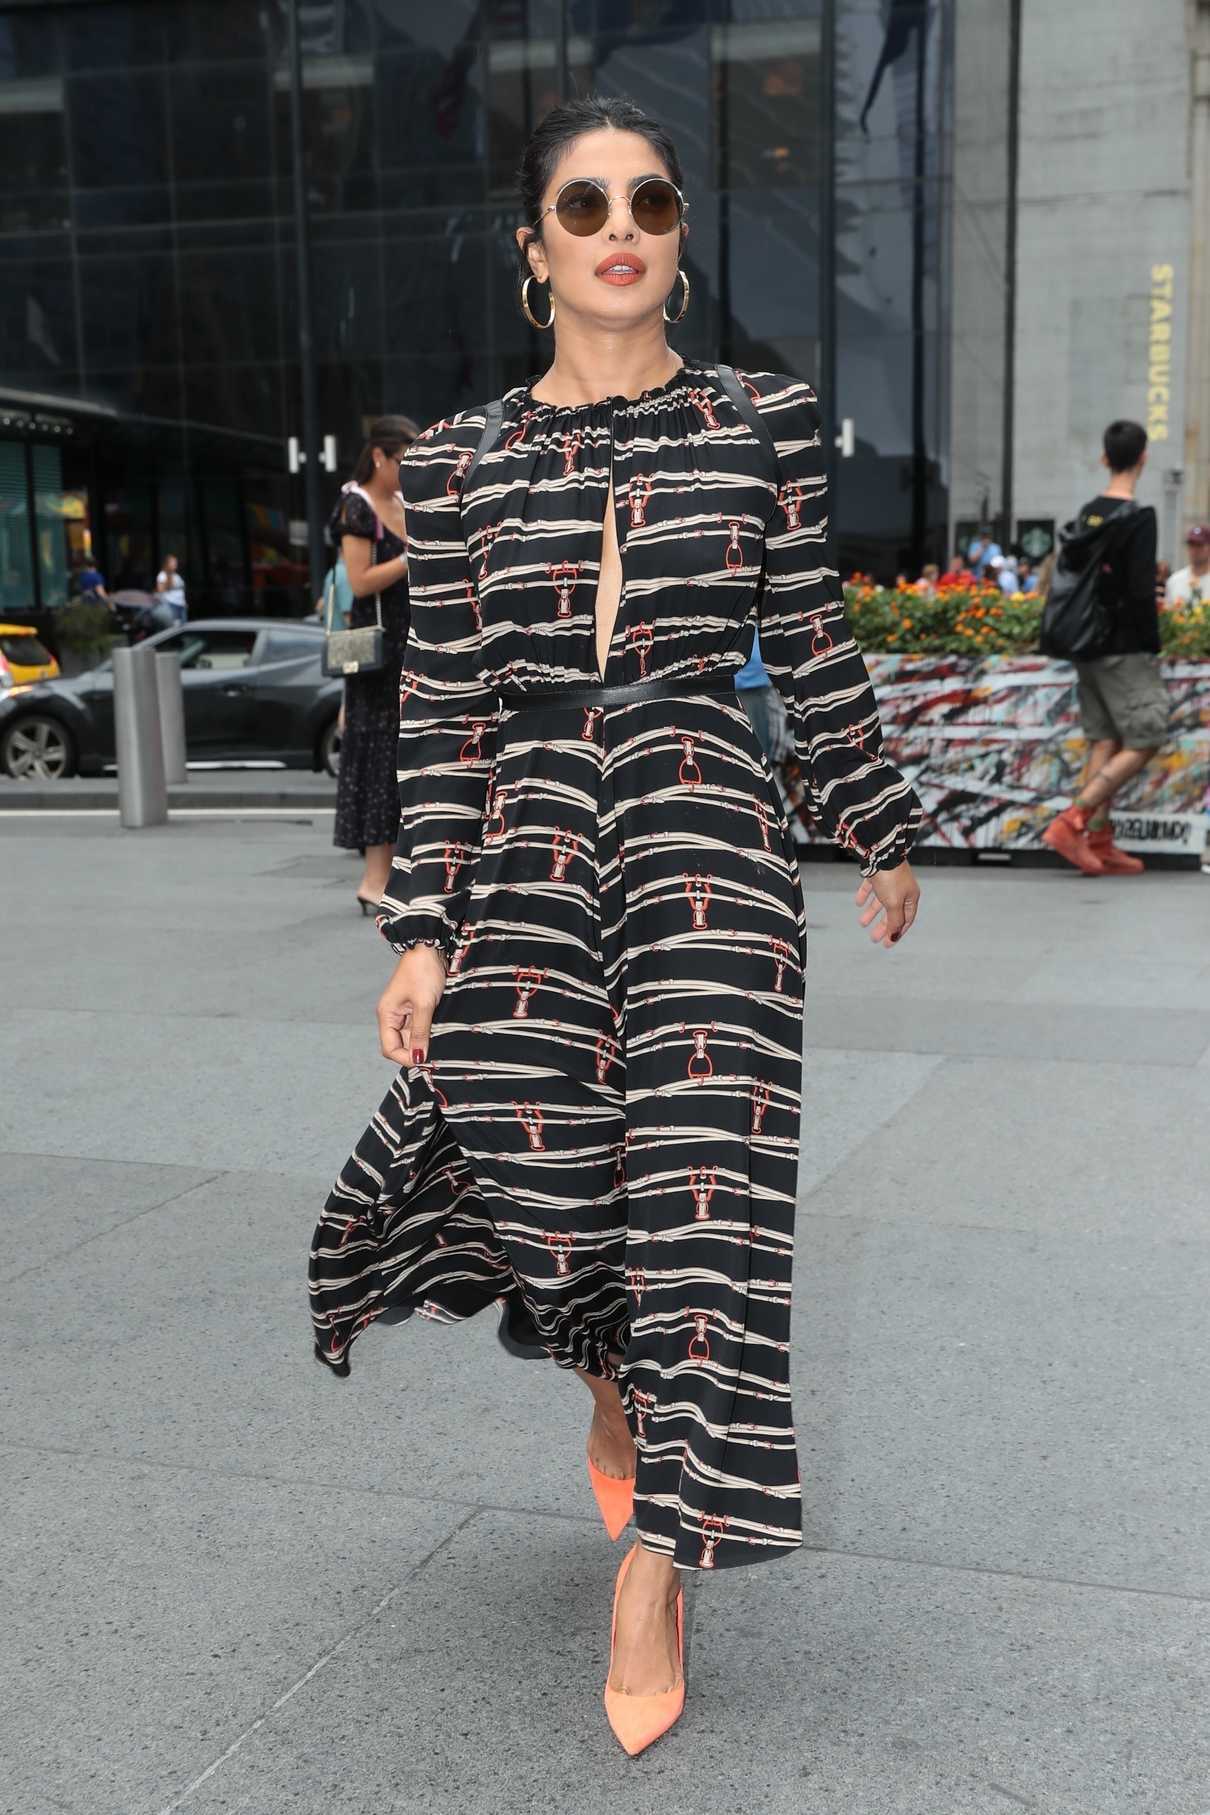 Priyanka Chopra in an Orange High Heel Shoes Was Seen Out in New York ...